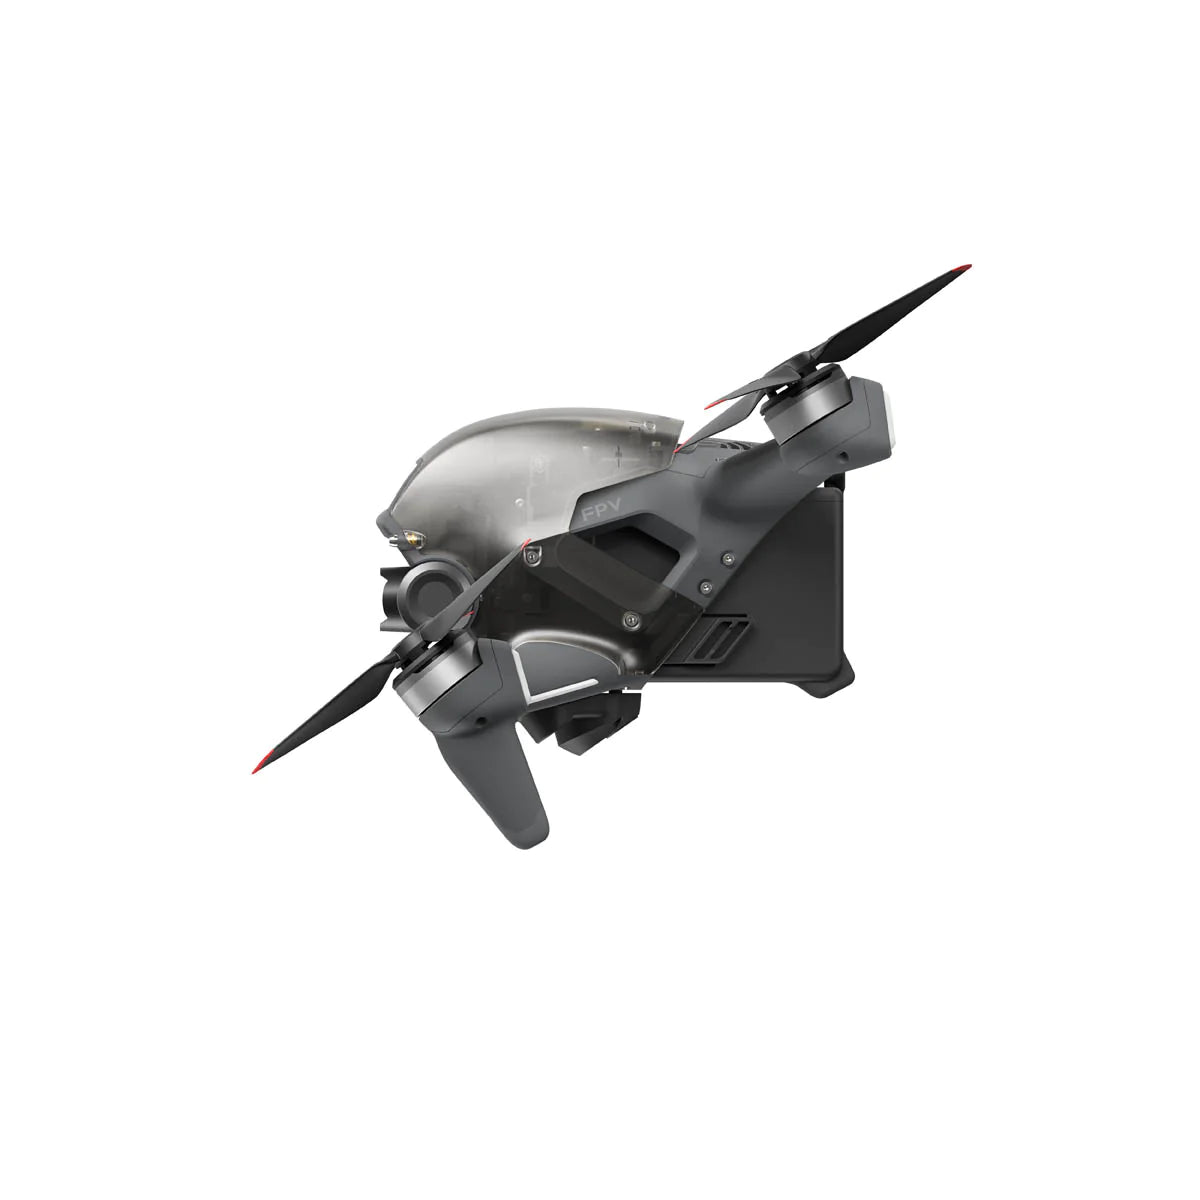 DJI FPV EXPLORER COMBO FIRST-PERSON VIEW DRONE UAV QUADCOPTER 4K